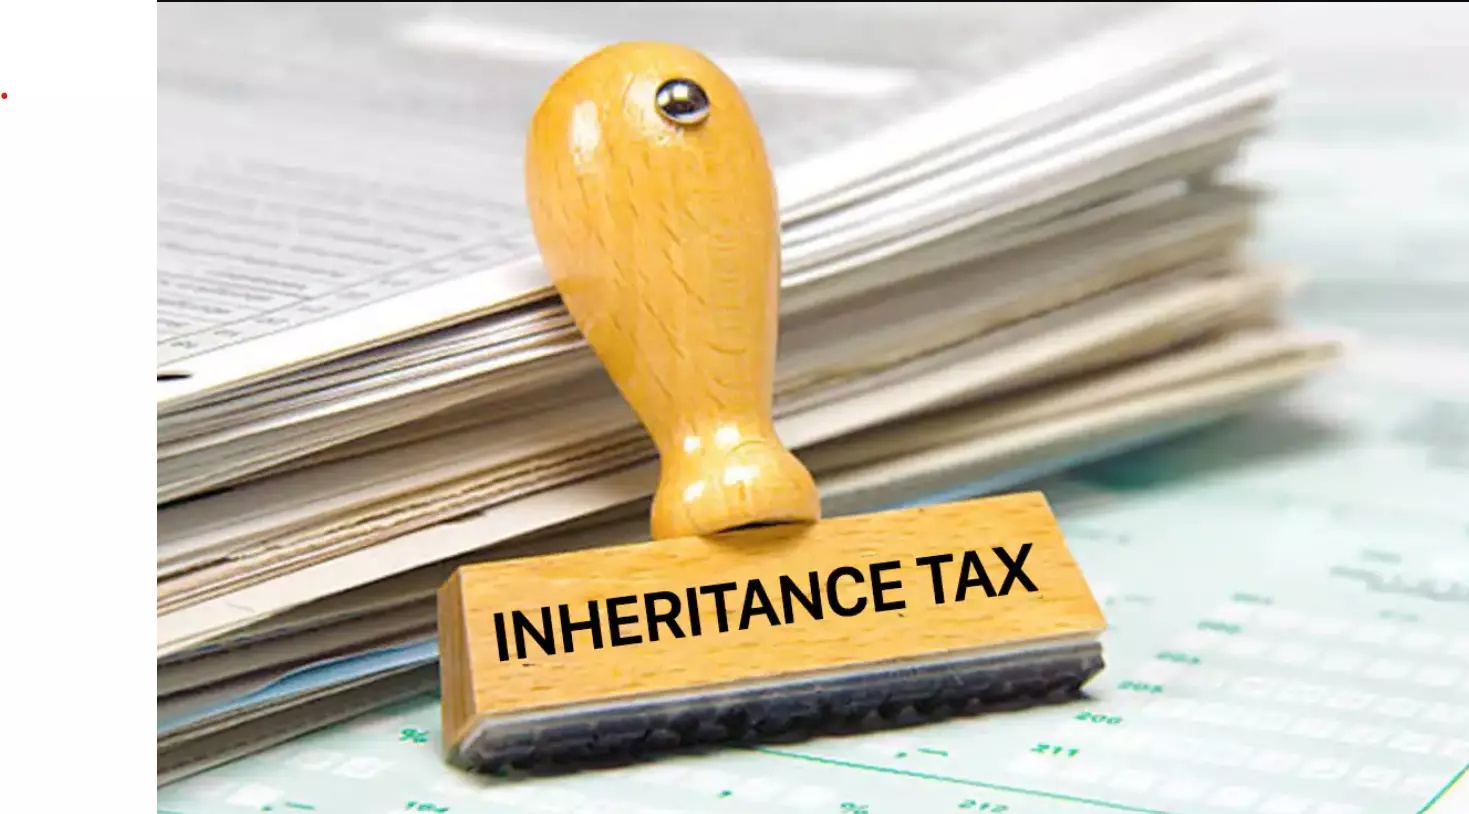 The inheritance of “tax”